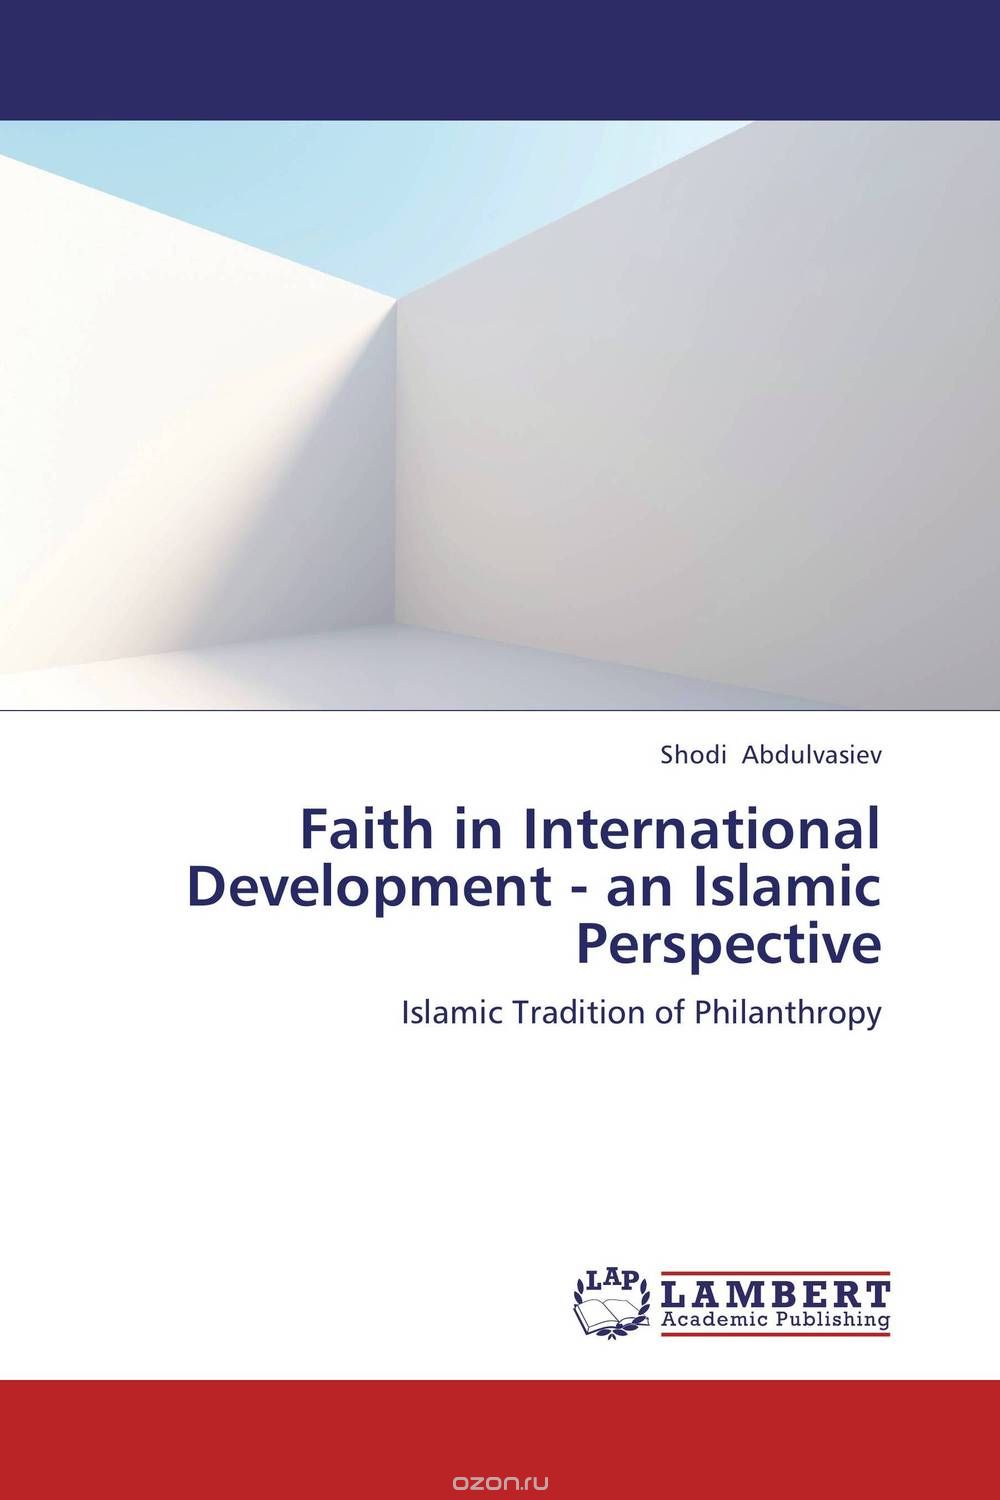 Скачать книгу "Faith in International Development - an Islamic Perspective"